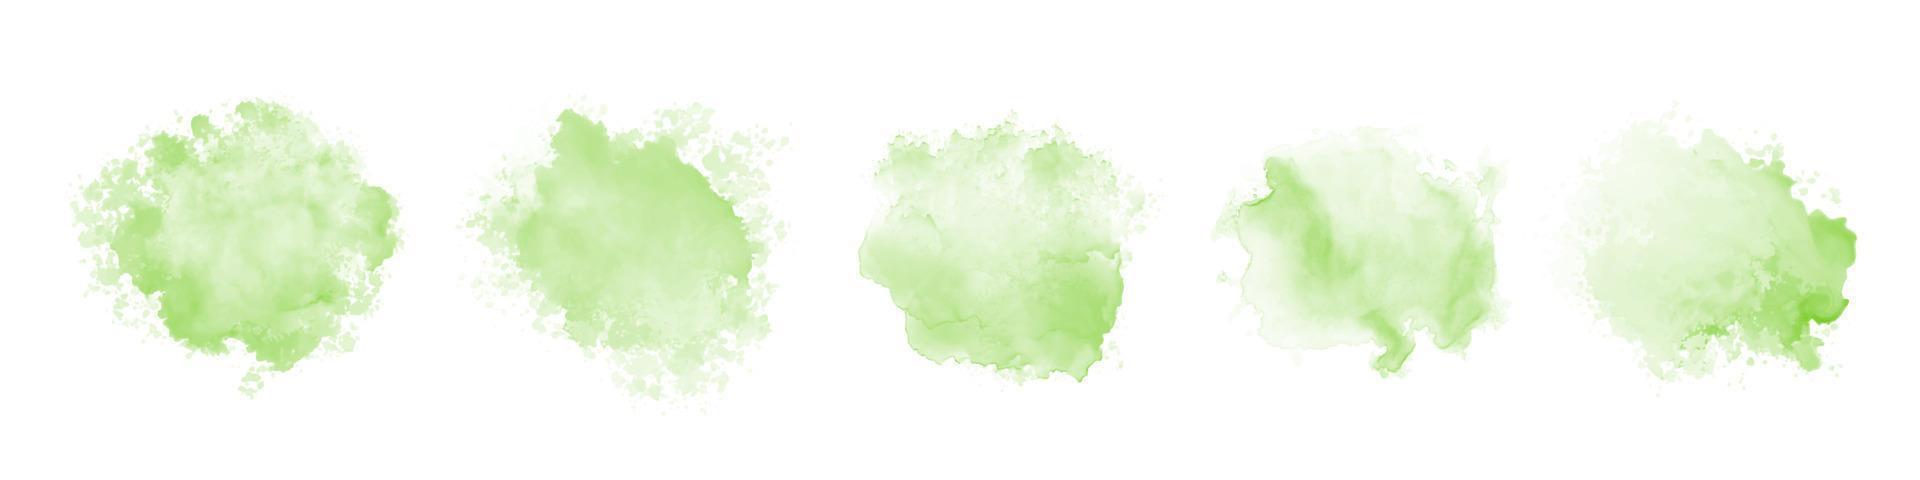 conjunto de salpicaduras de agua de acuarela verde abstracta sobre un fondo blanco. textura de acuarela vectorial en color de ensalada vector